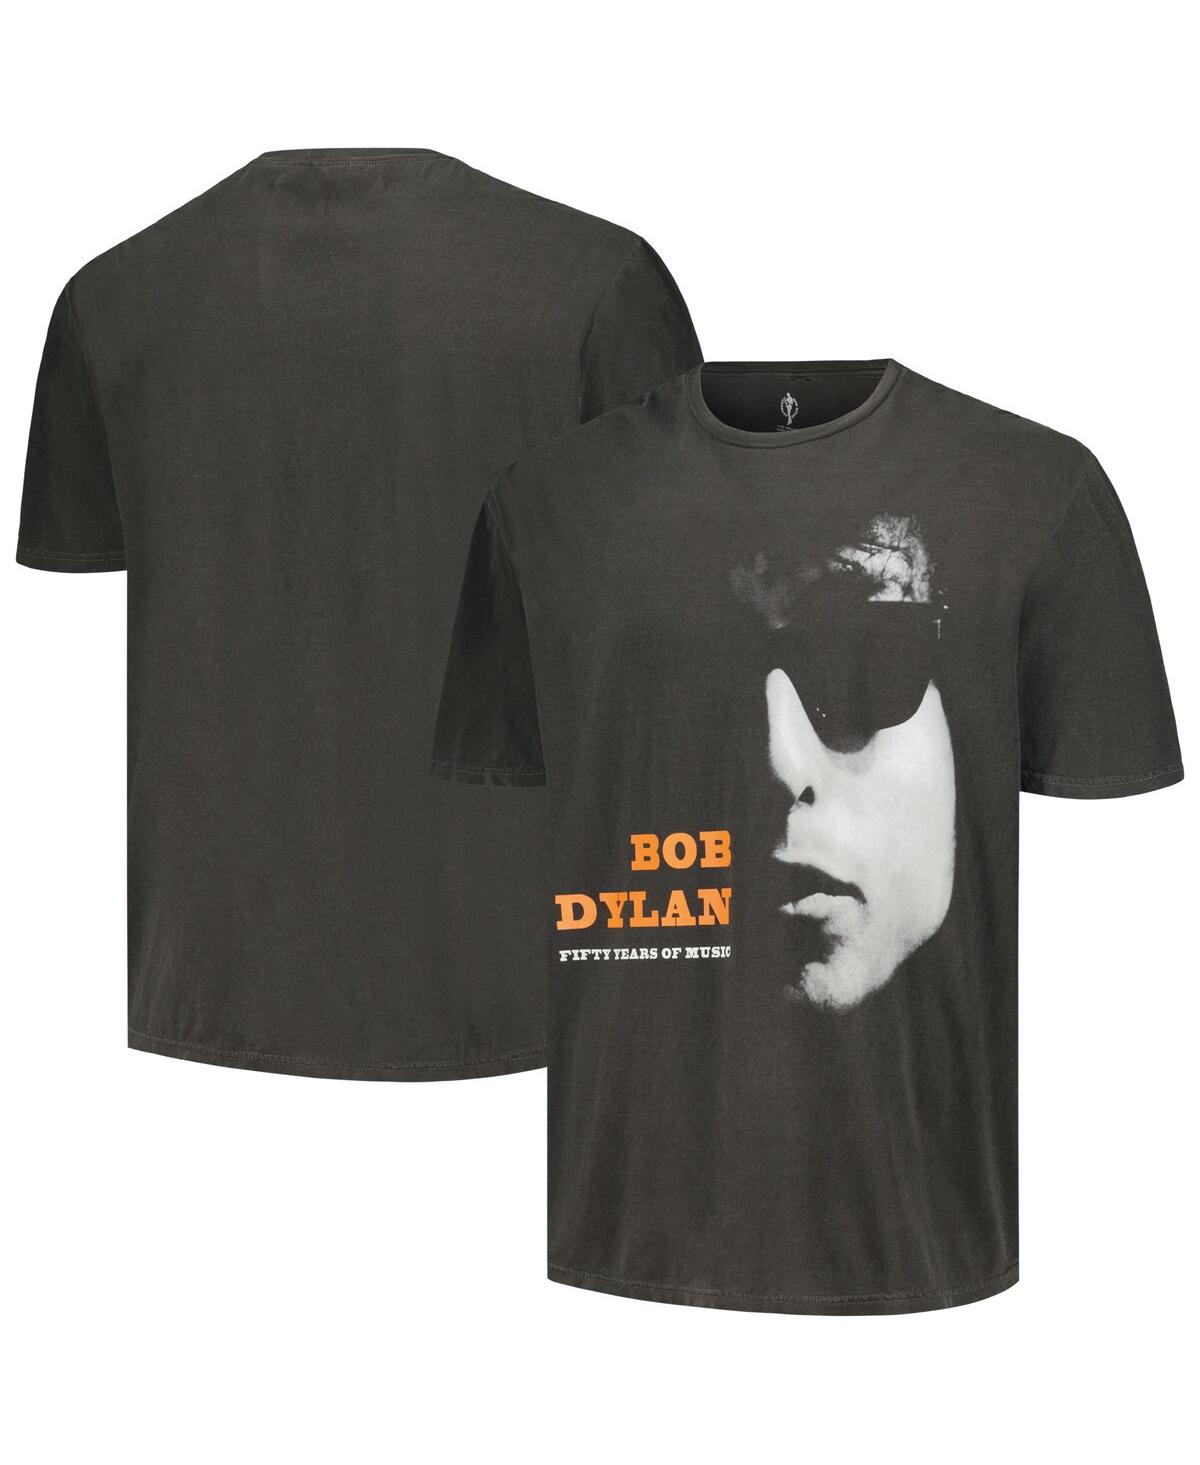 Men's Black Distressed Bob Dylan 50 Years Washed Graphic T-shirt - Black